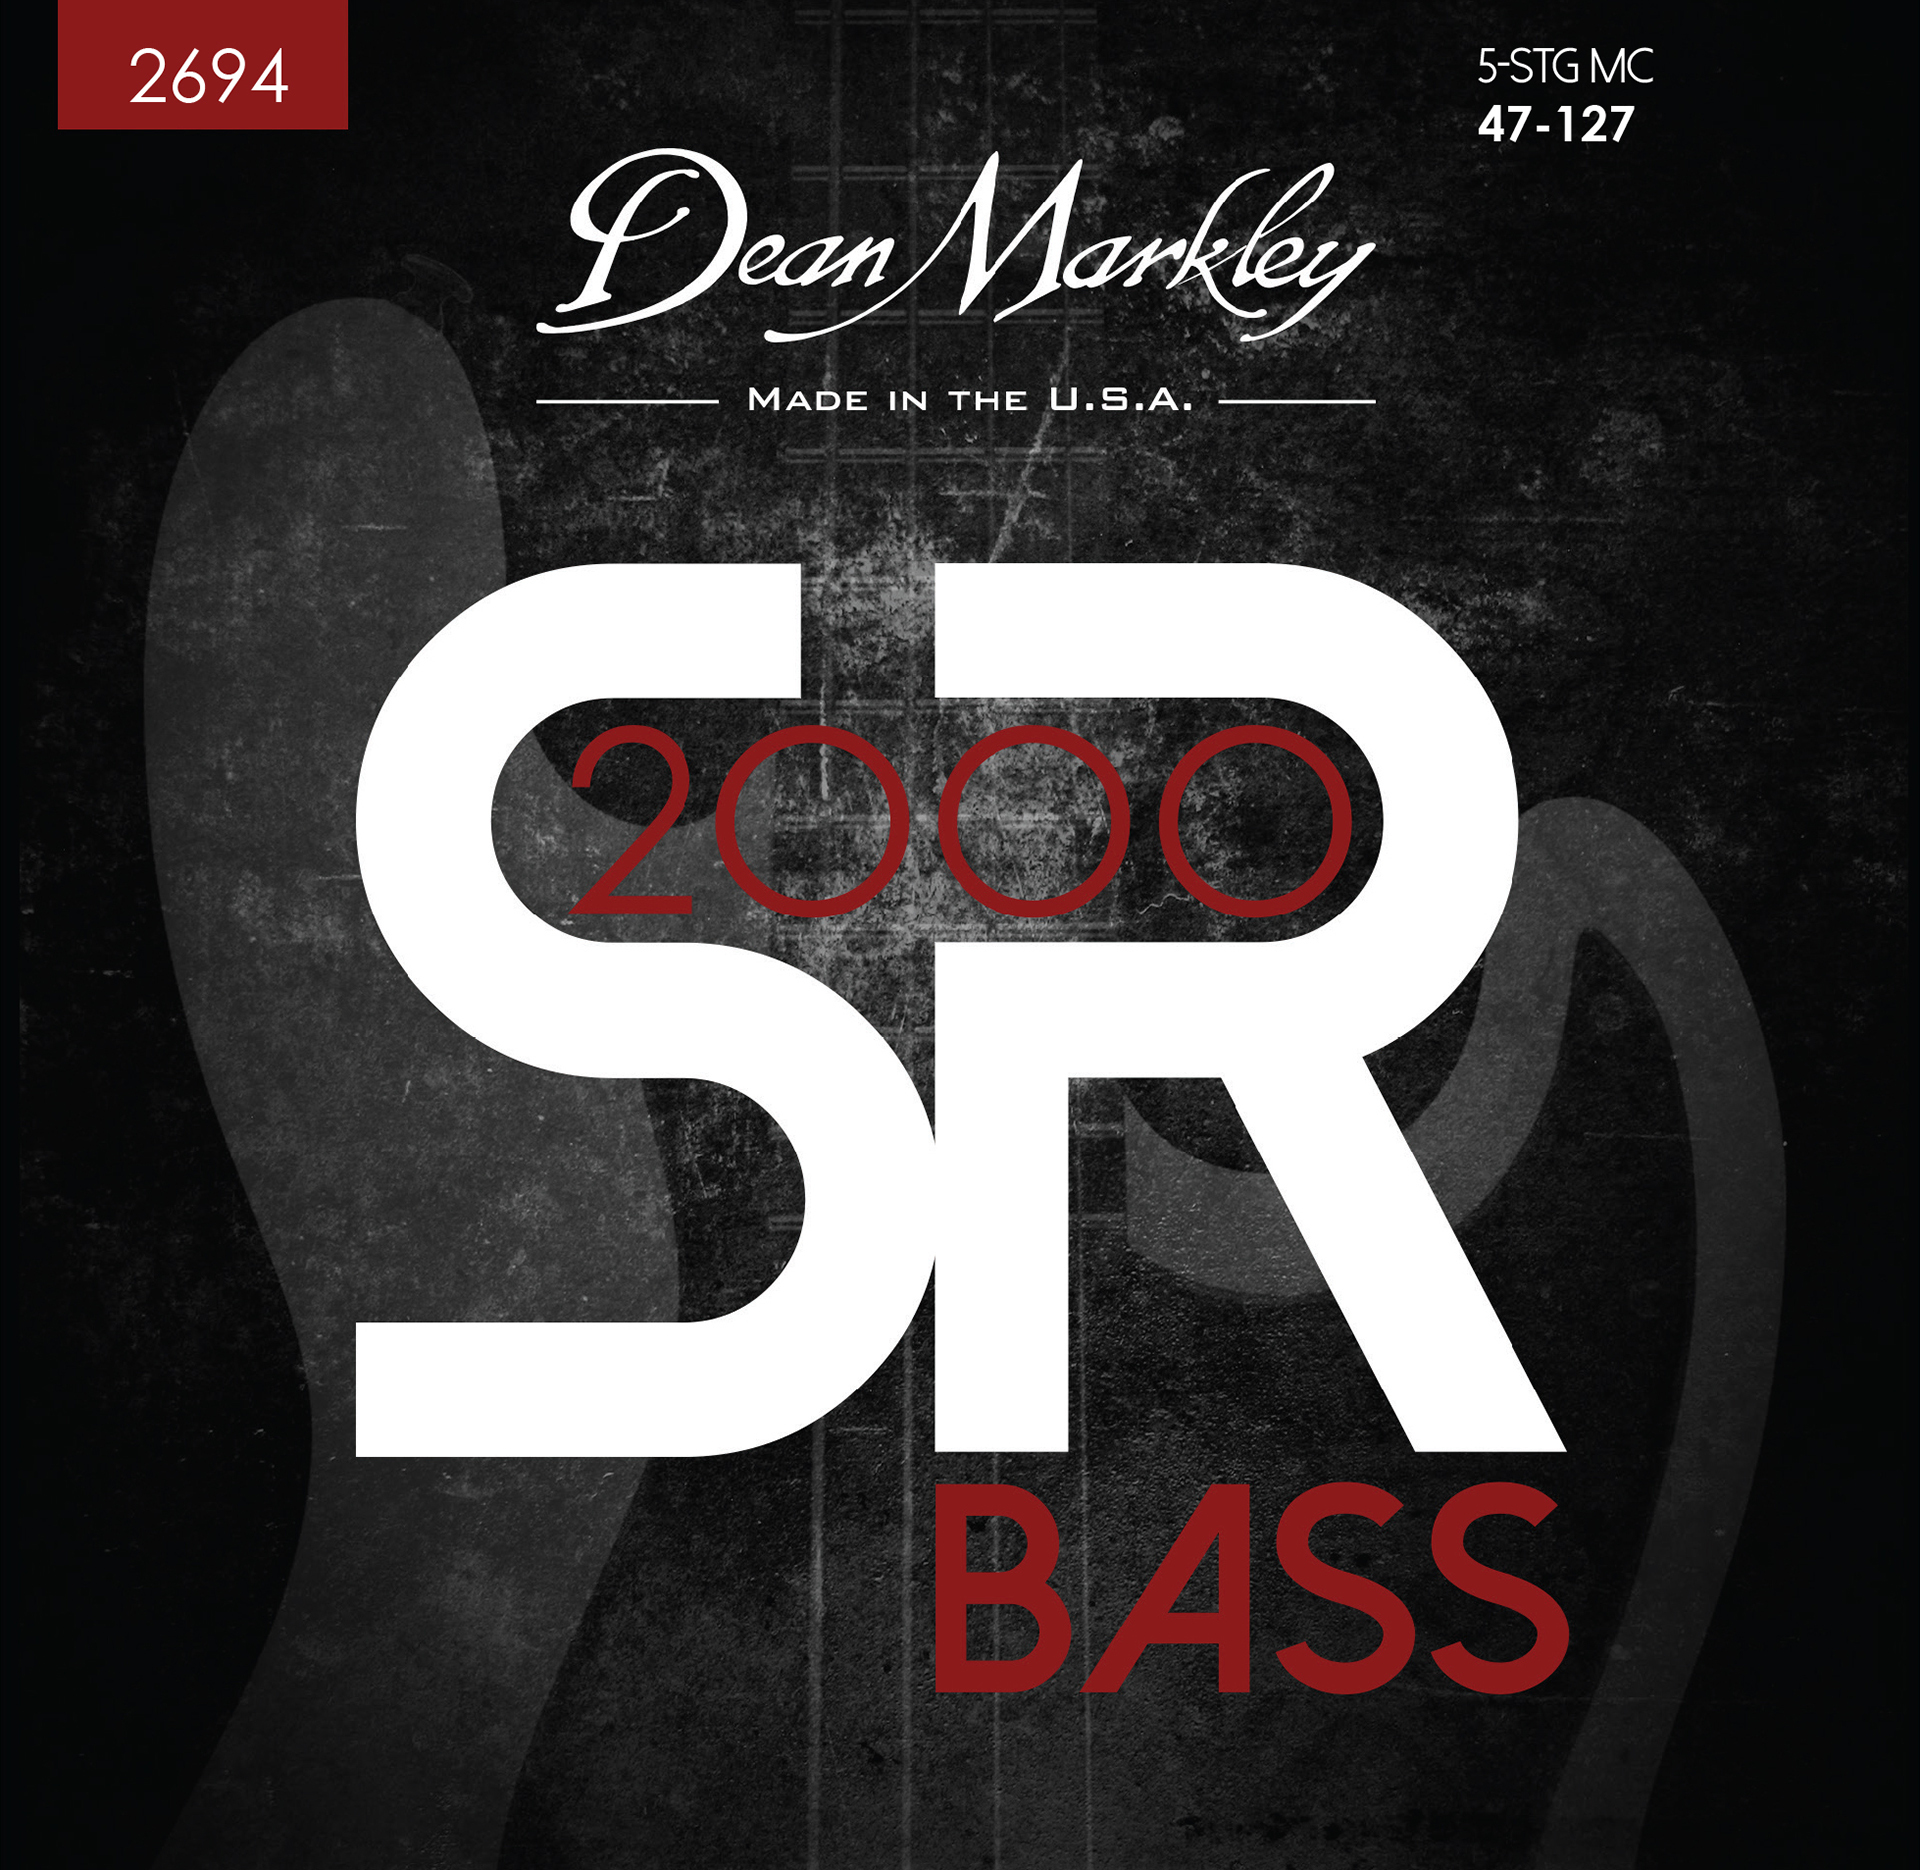 Dean Markley SR 2000 - 2694 - Electric Bass String Set, 5-String, Medium Custom, .047-.127